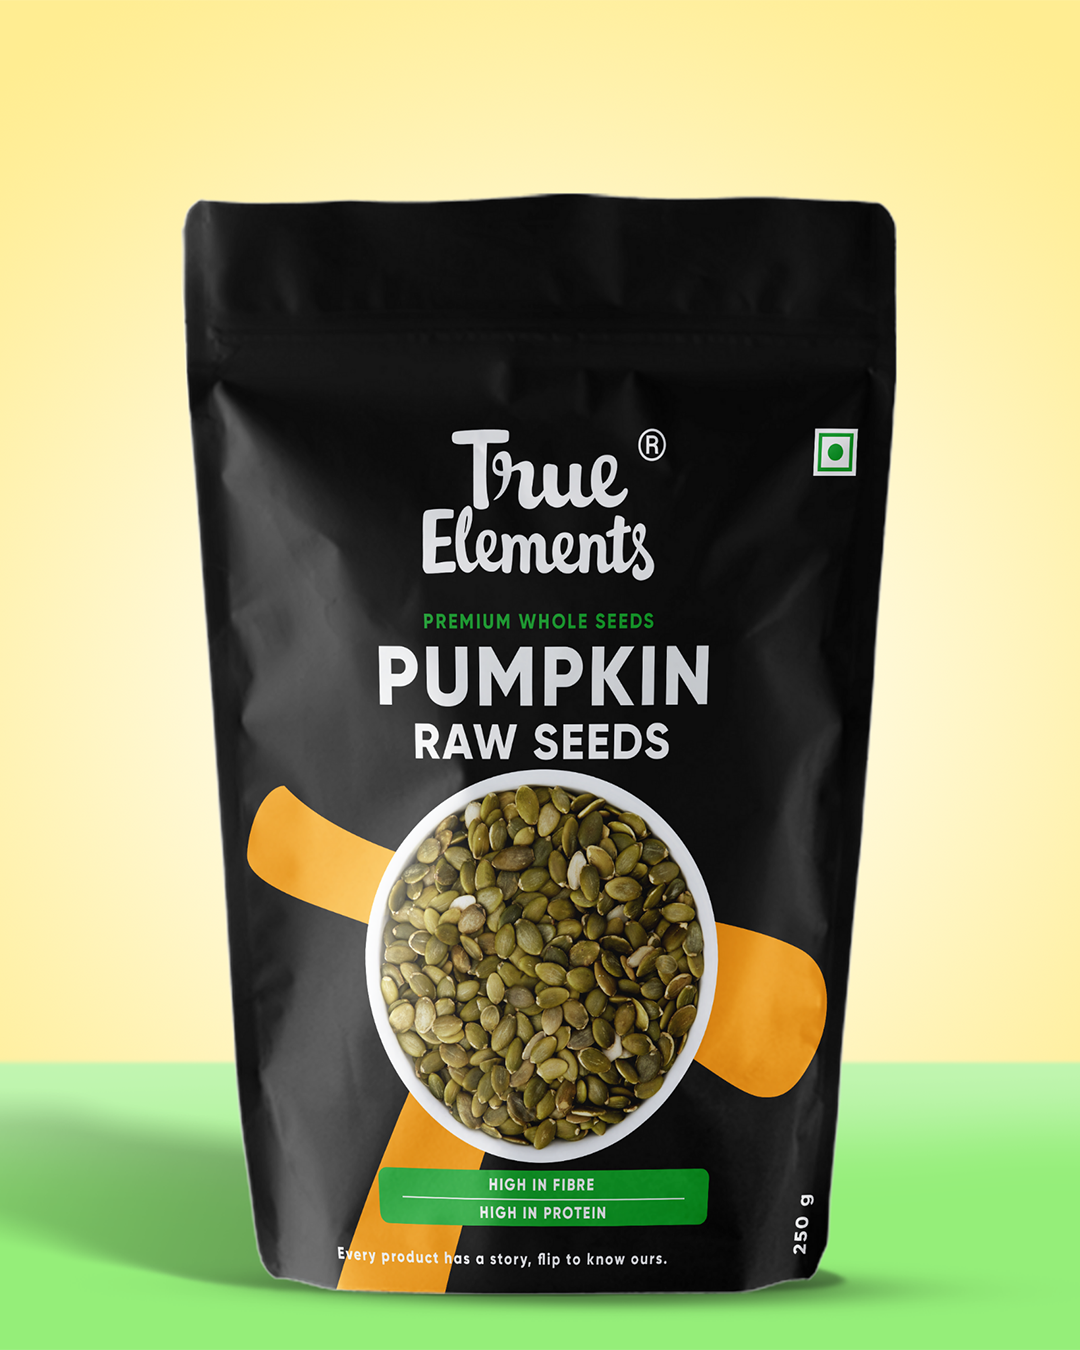 True elements raw pumpkin seeds 250g Pouch (Premium Whole Seeds)